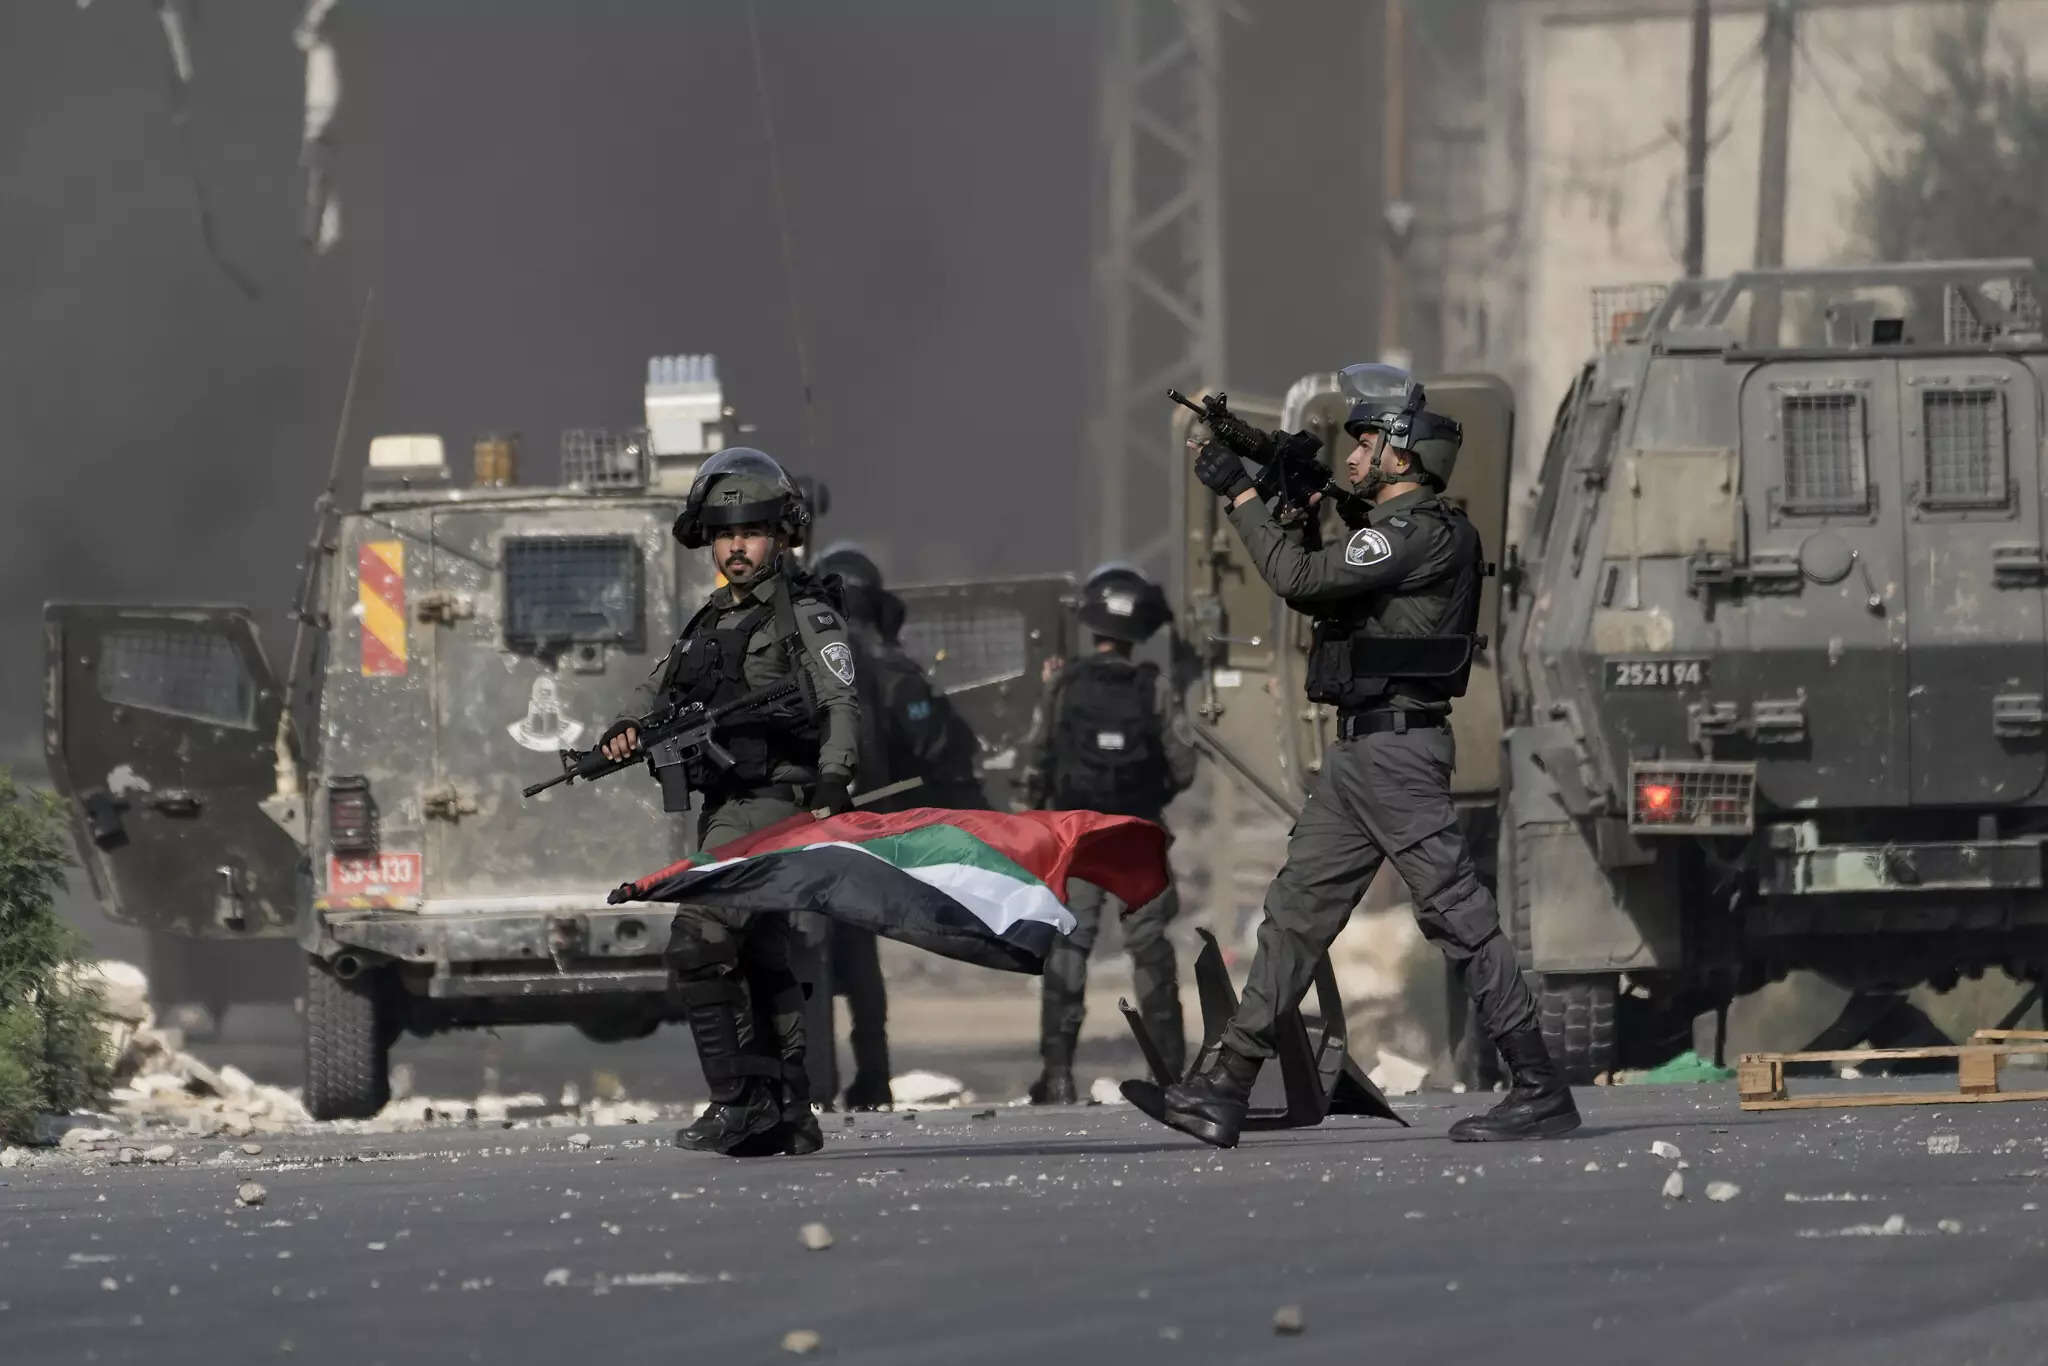 Palestinian security force kills Islamic Jihad gunman in rare internal clash 